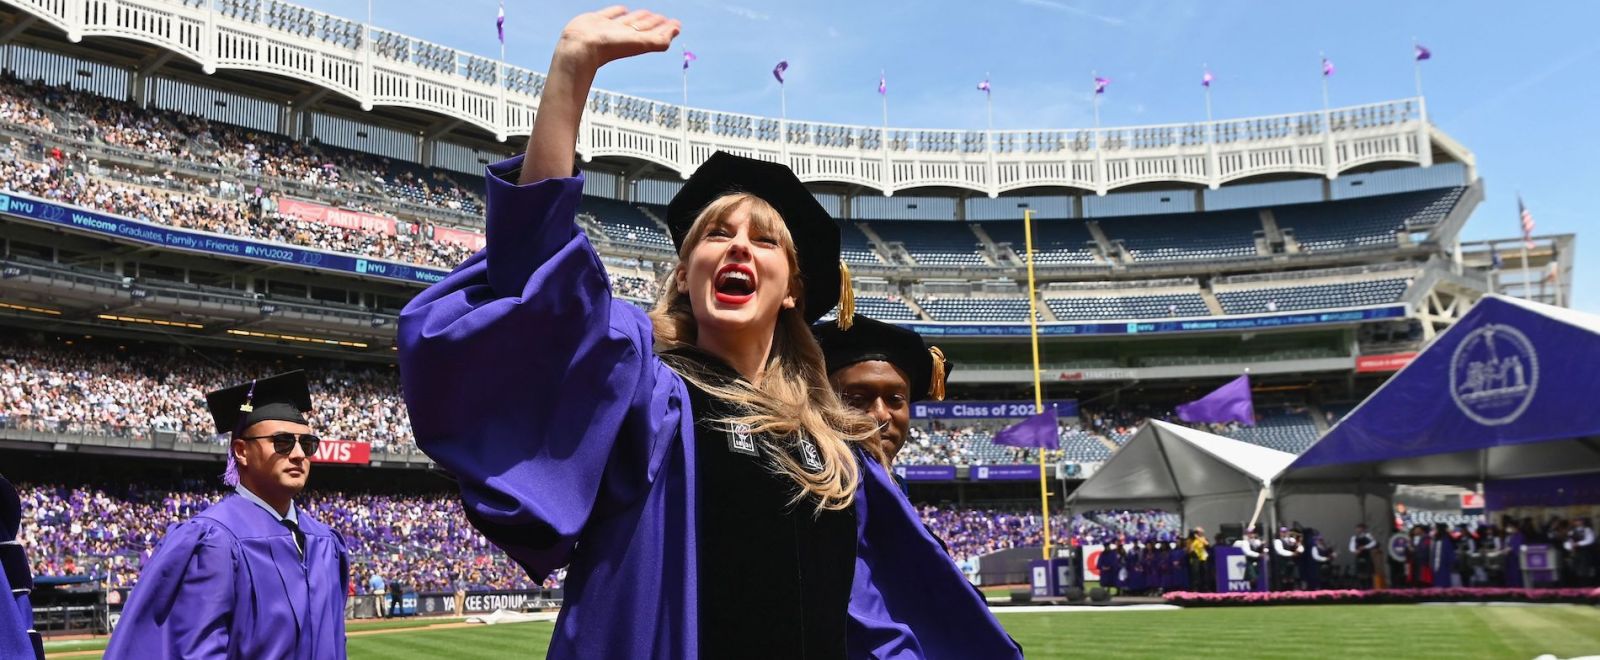 Taylor Swift NYU Graduation Commencement Ceremony 2022